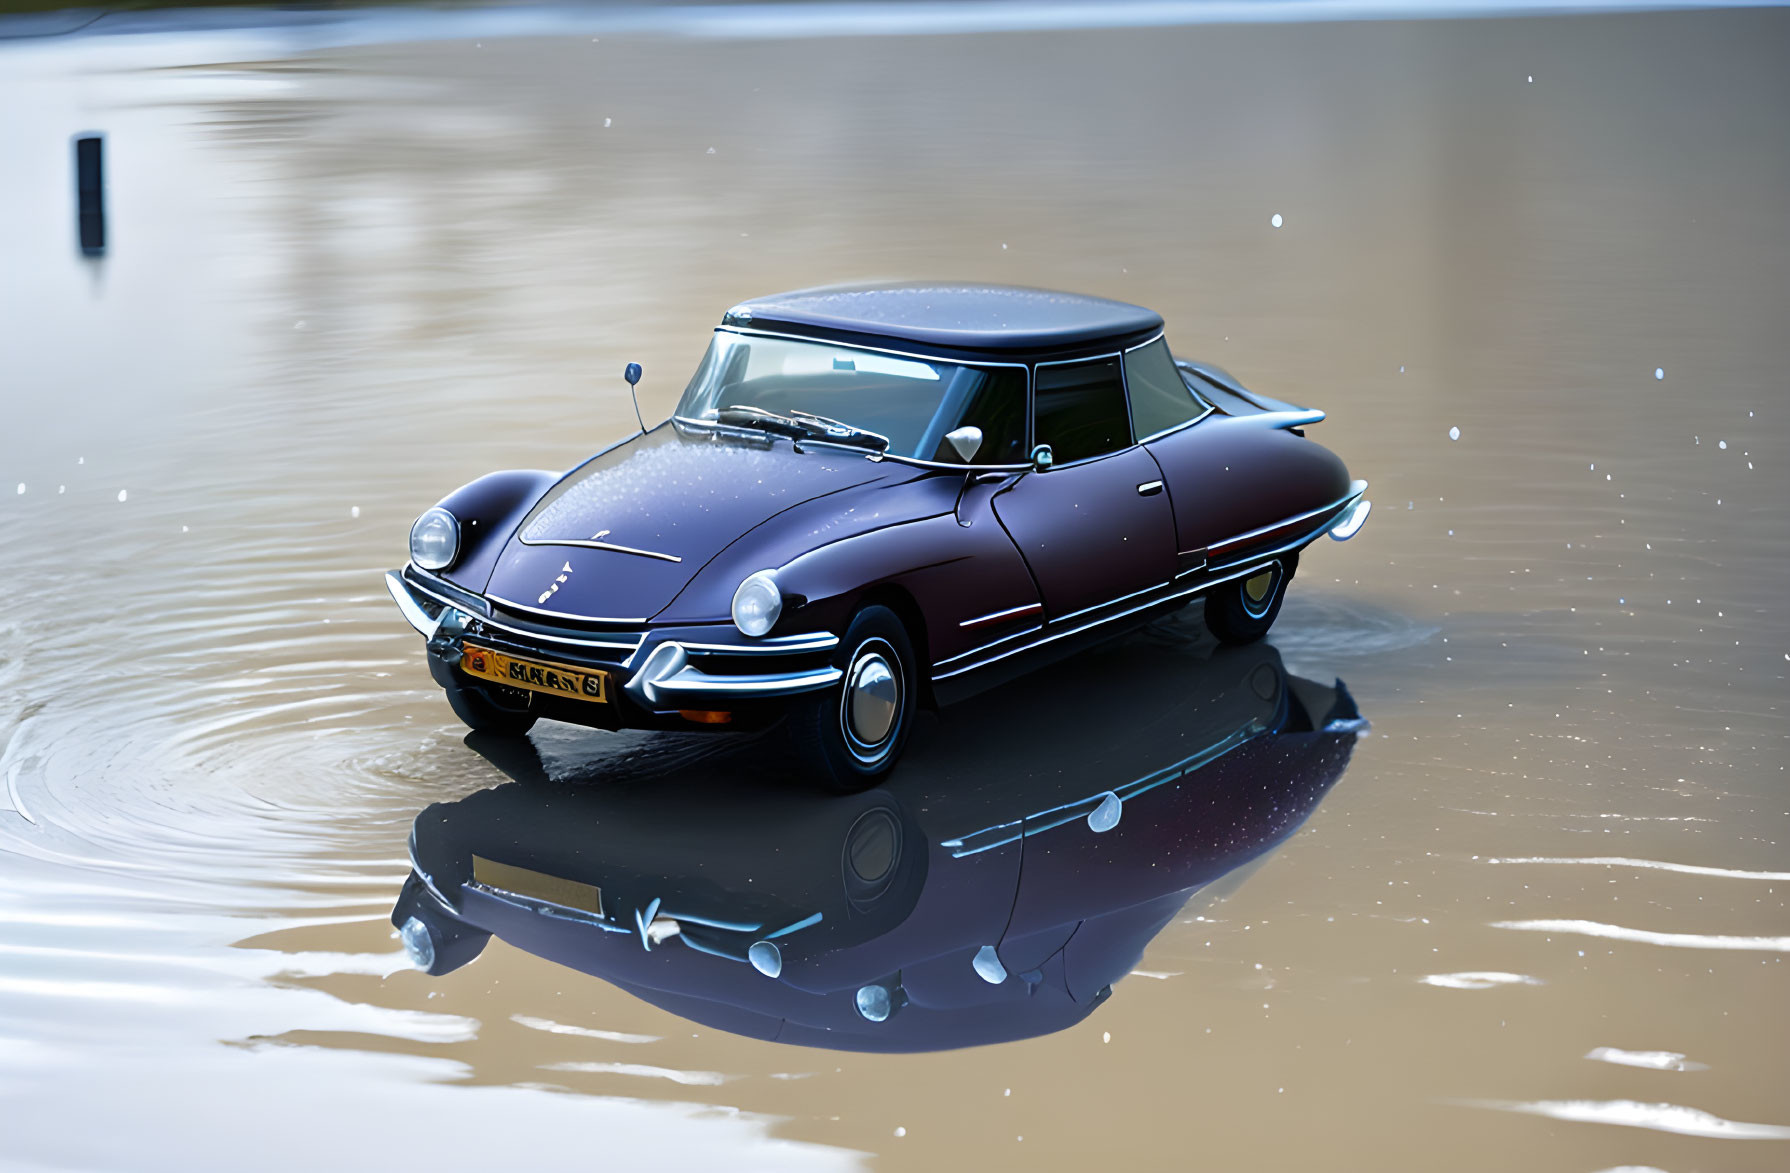 Vintage Dark Blue Car Reflected on Wet Surface